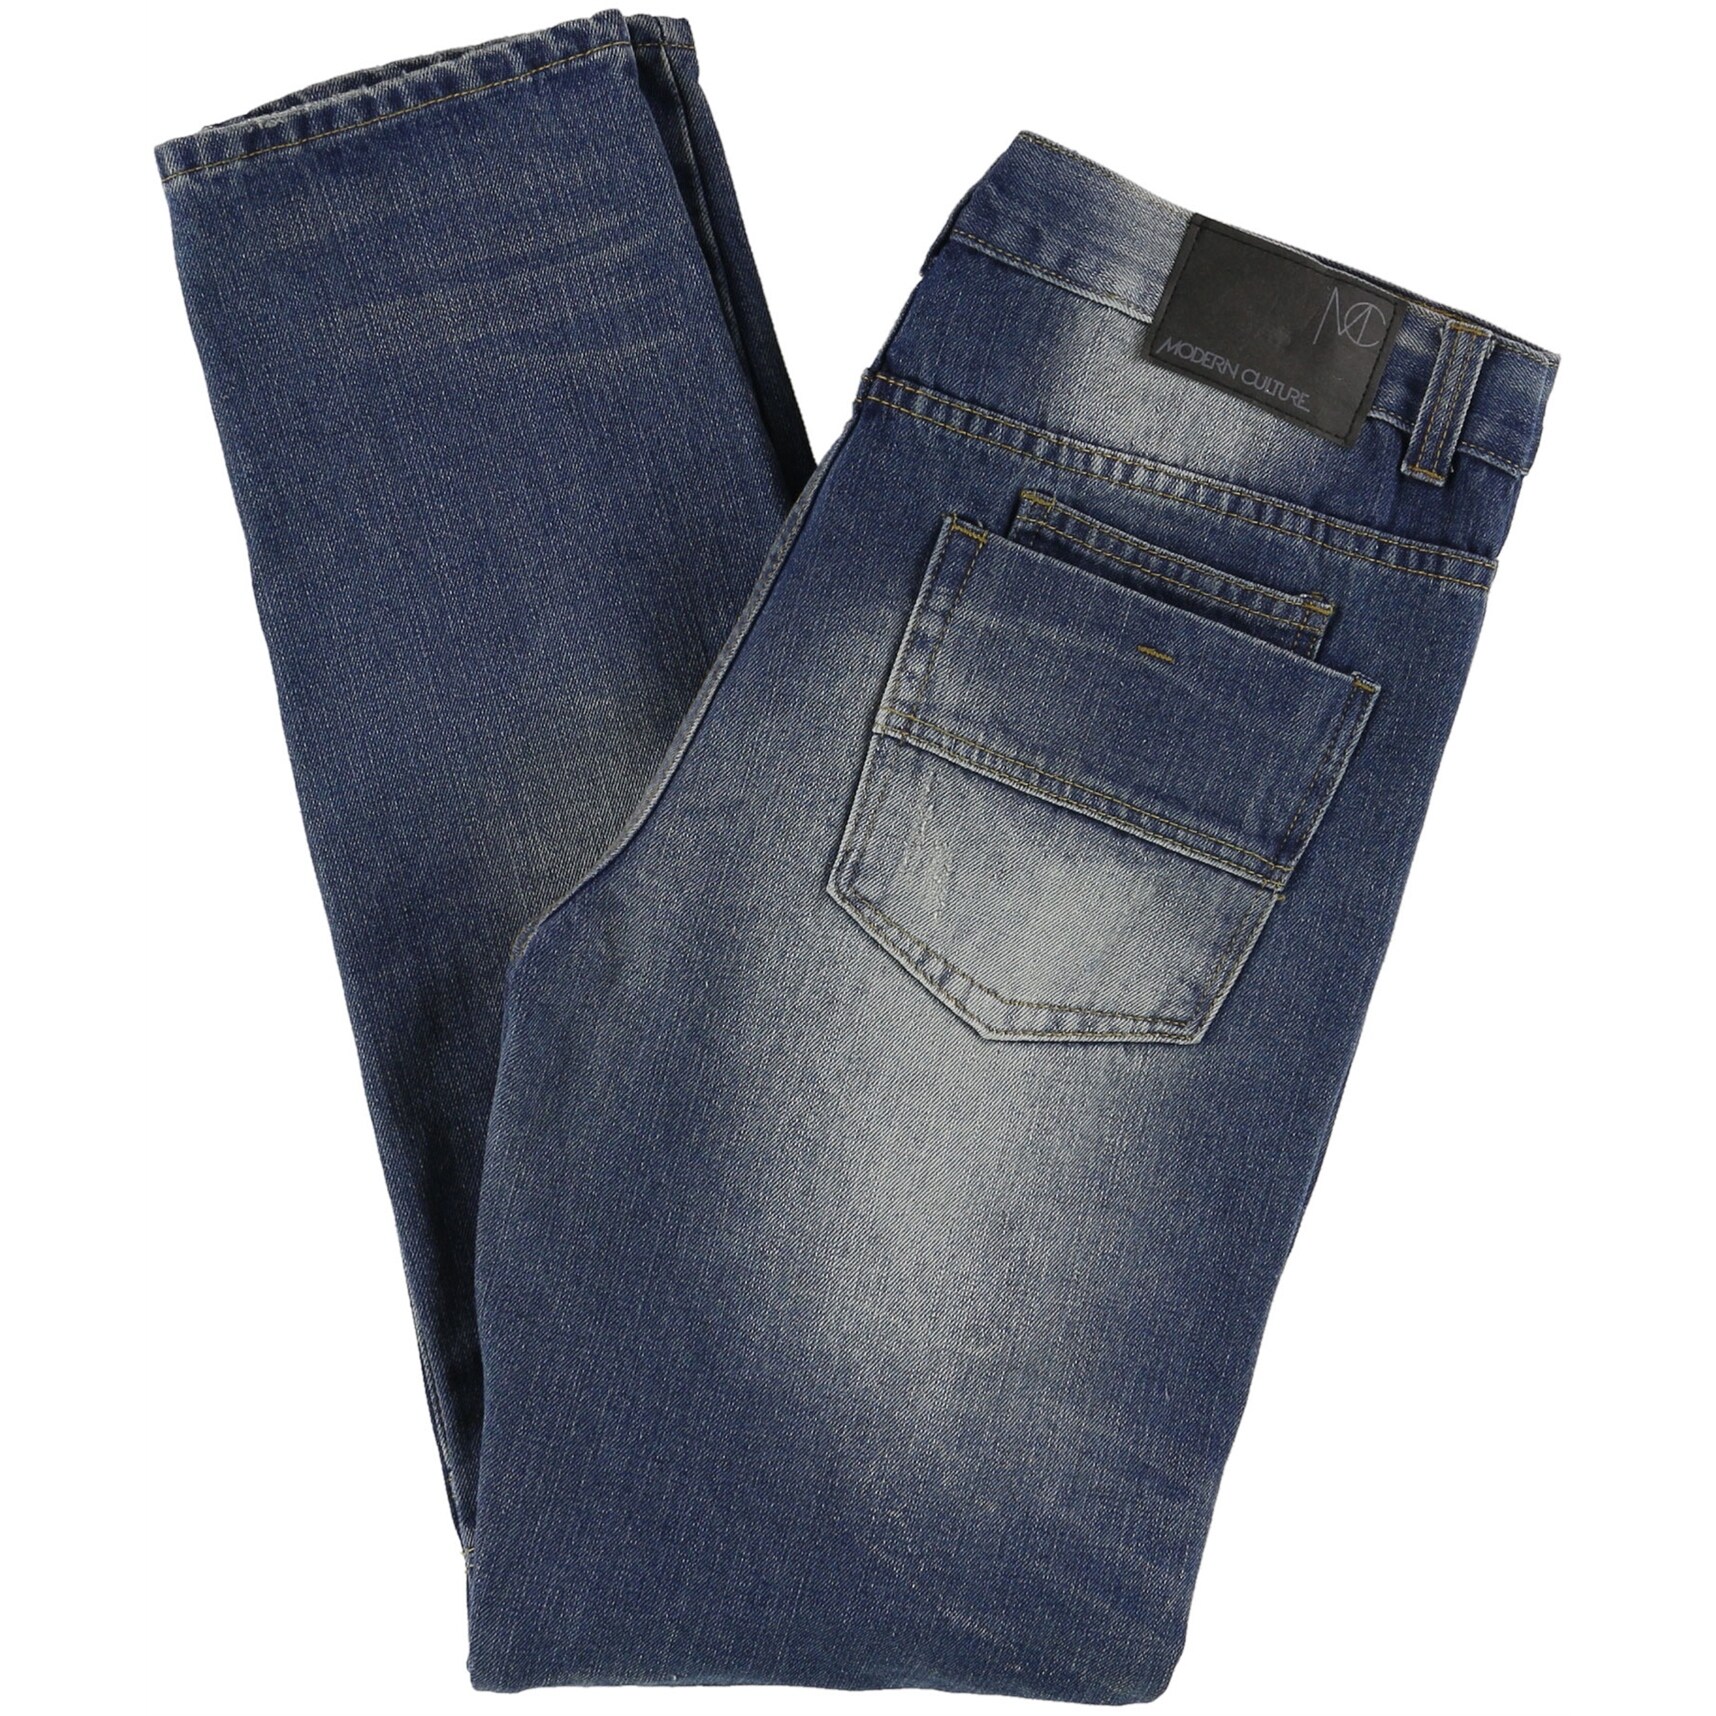 denim culture jeans mens